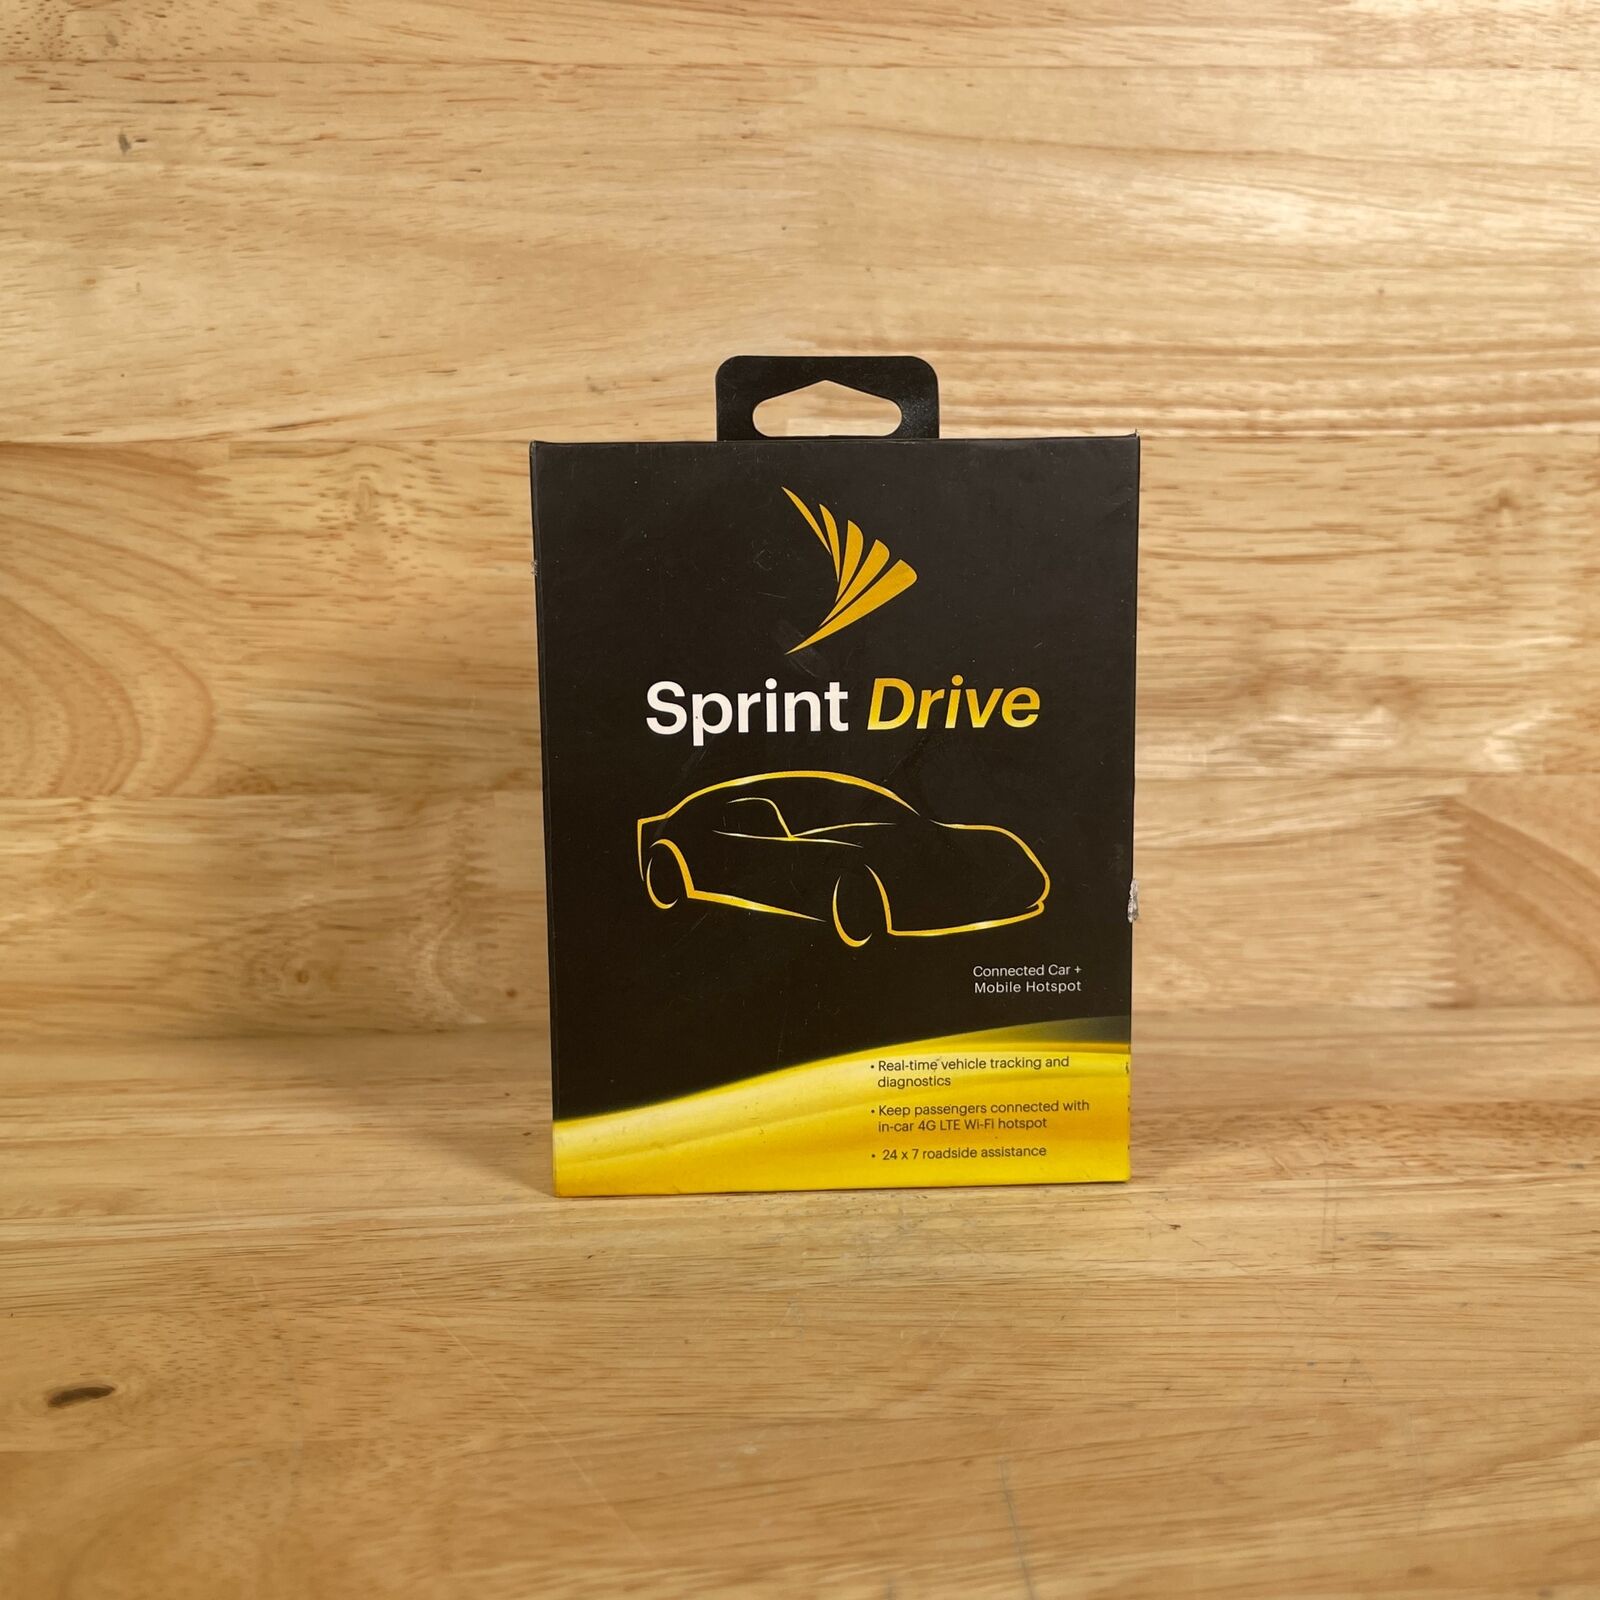 Sprint Drive HSA-15US-AA Black 4G LTE Wi-Fi Mobile Hotspot In-Car GPS Tracker